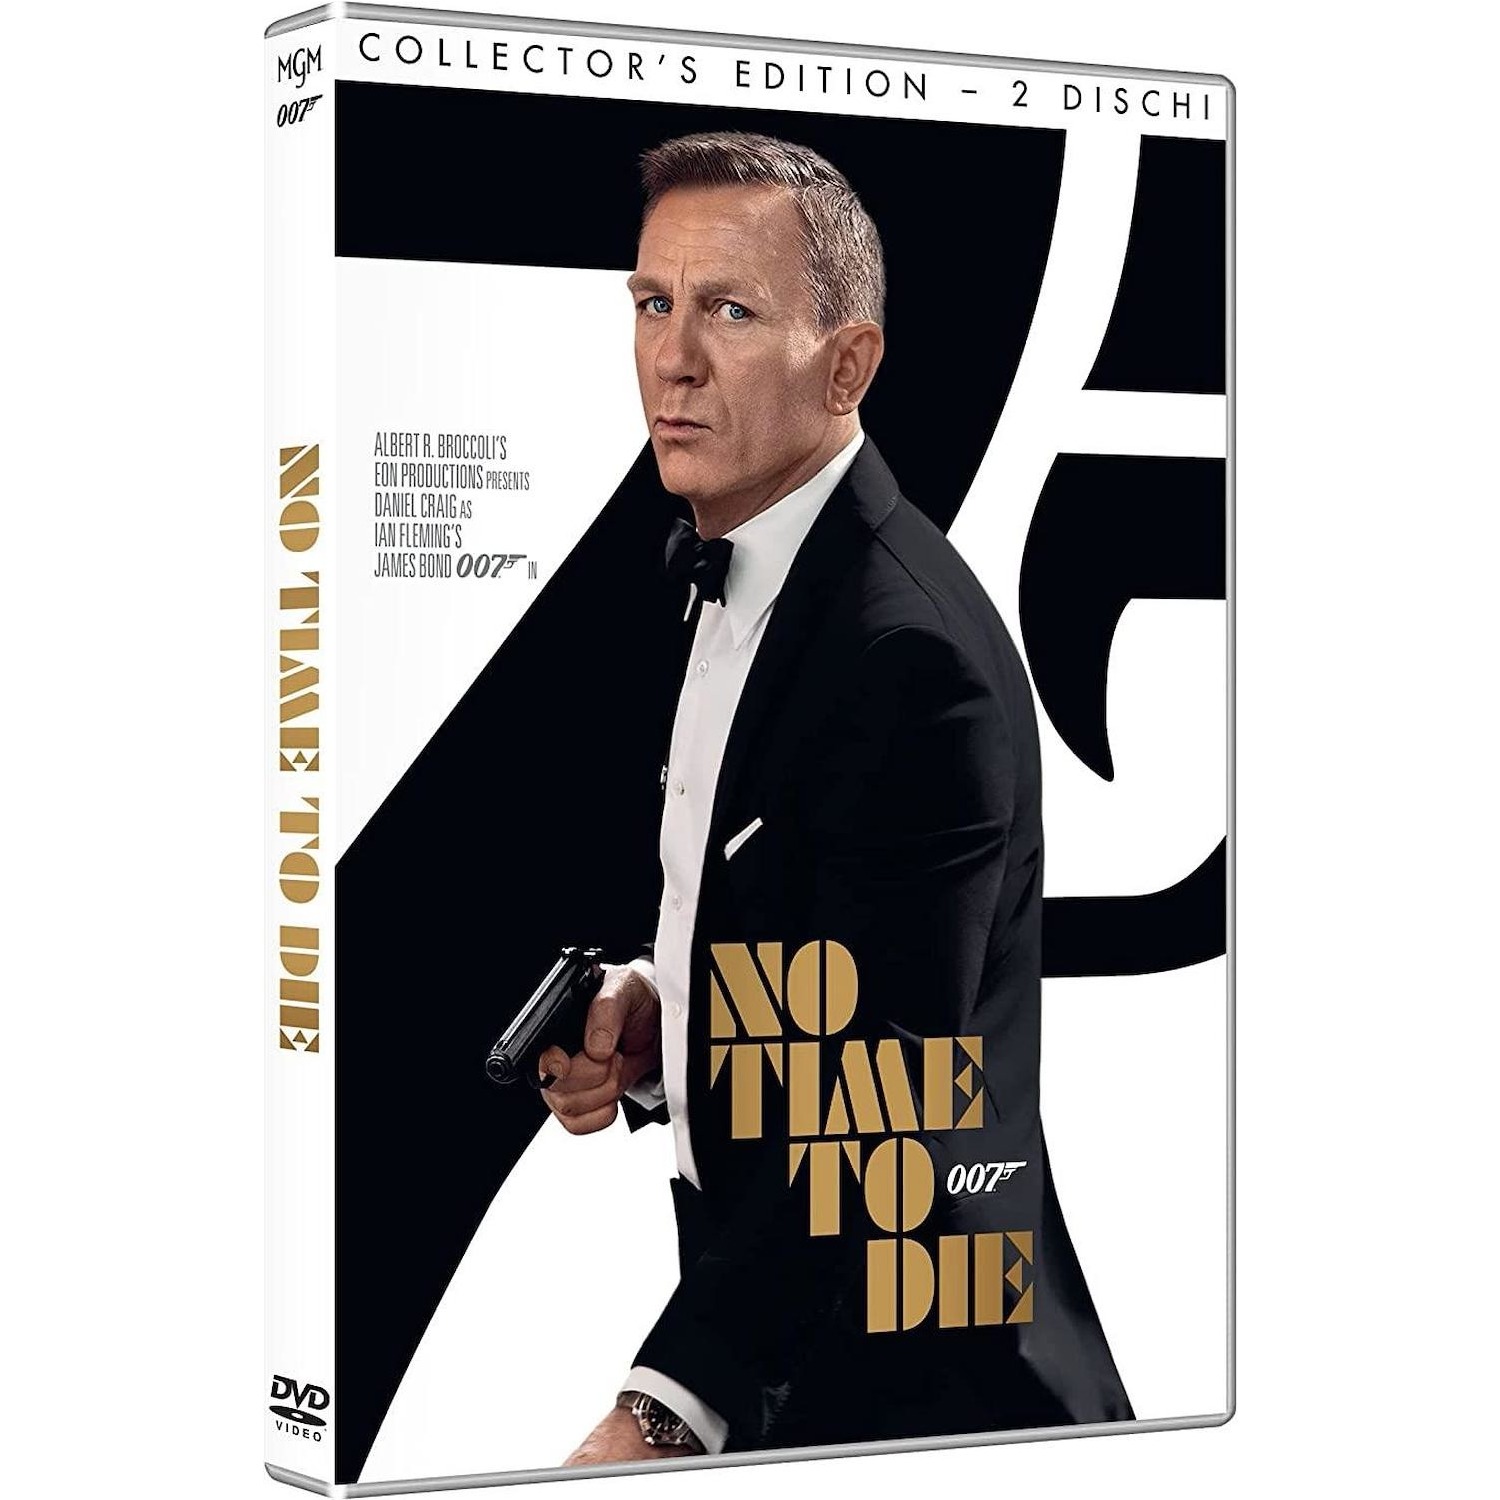 Immagine per DVD 007 No Time to Die da DIMOStore